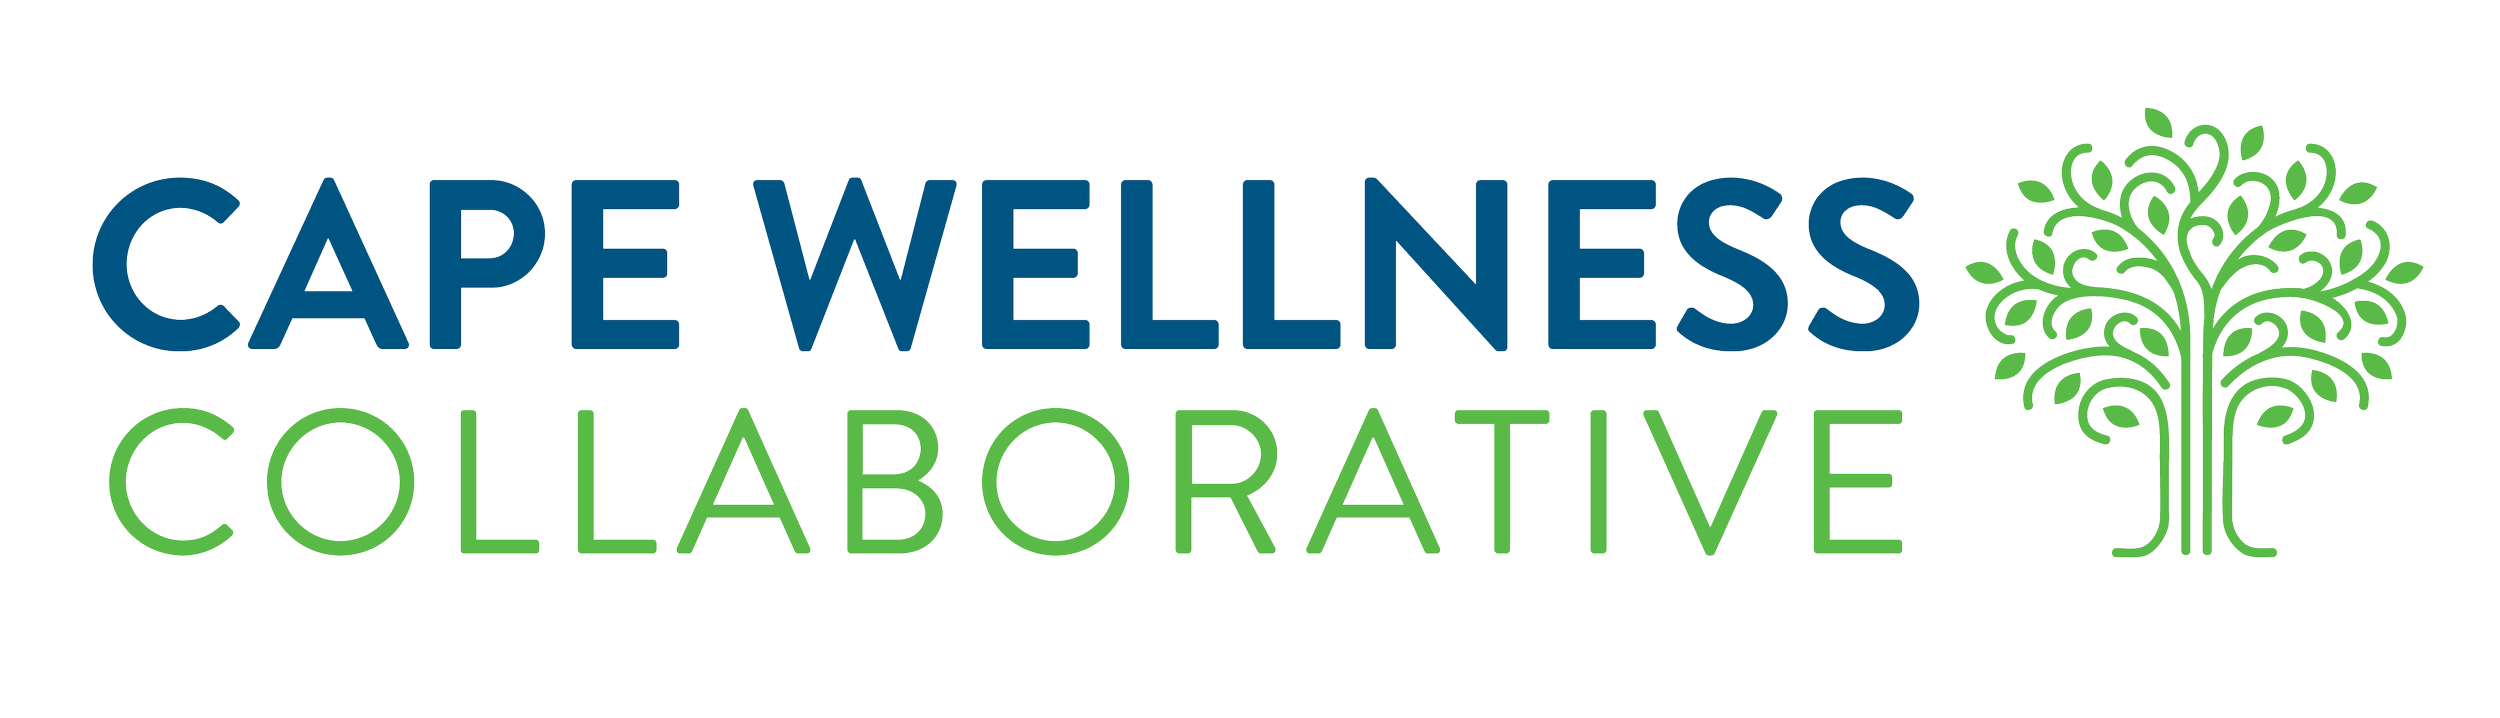 Cape Wellness Collaborative.png